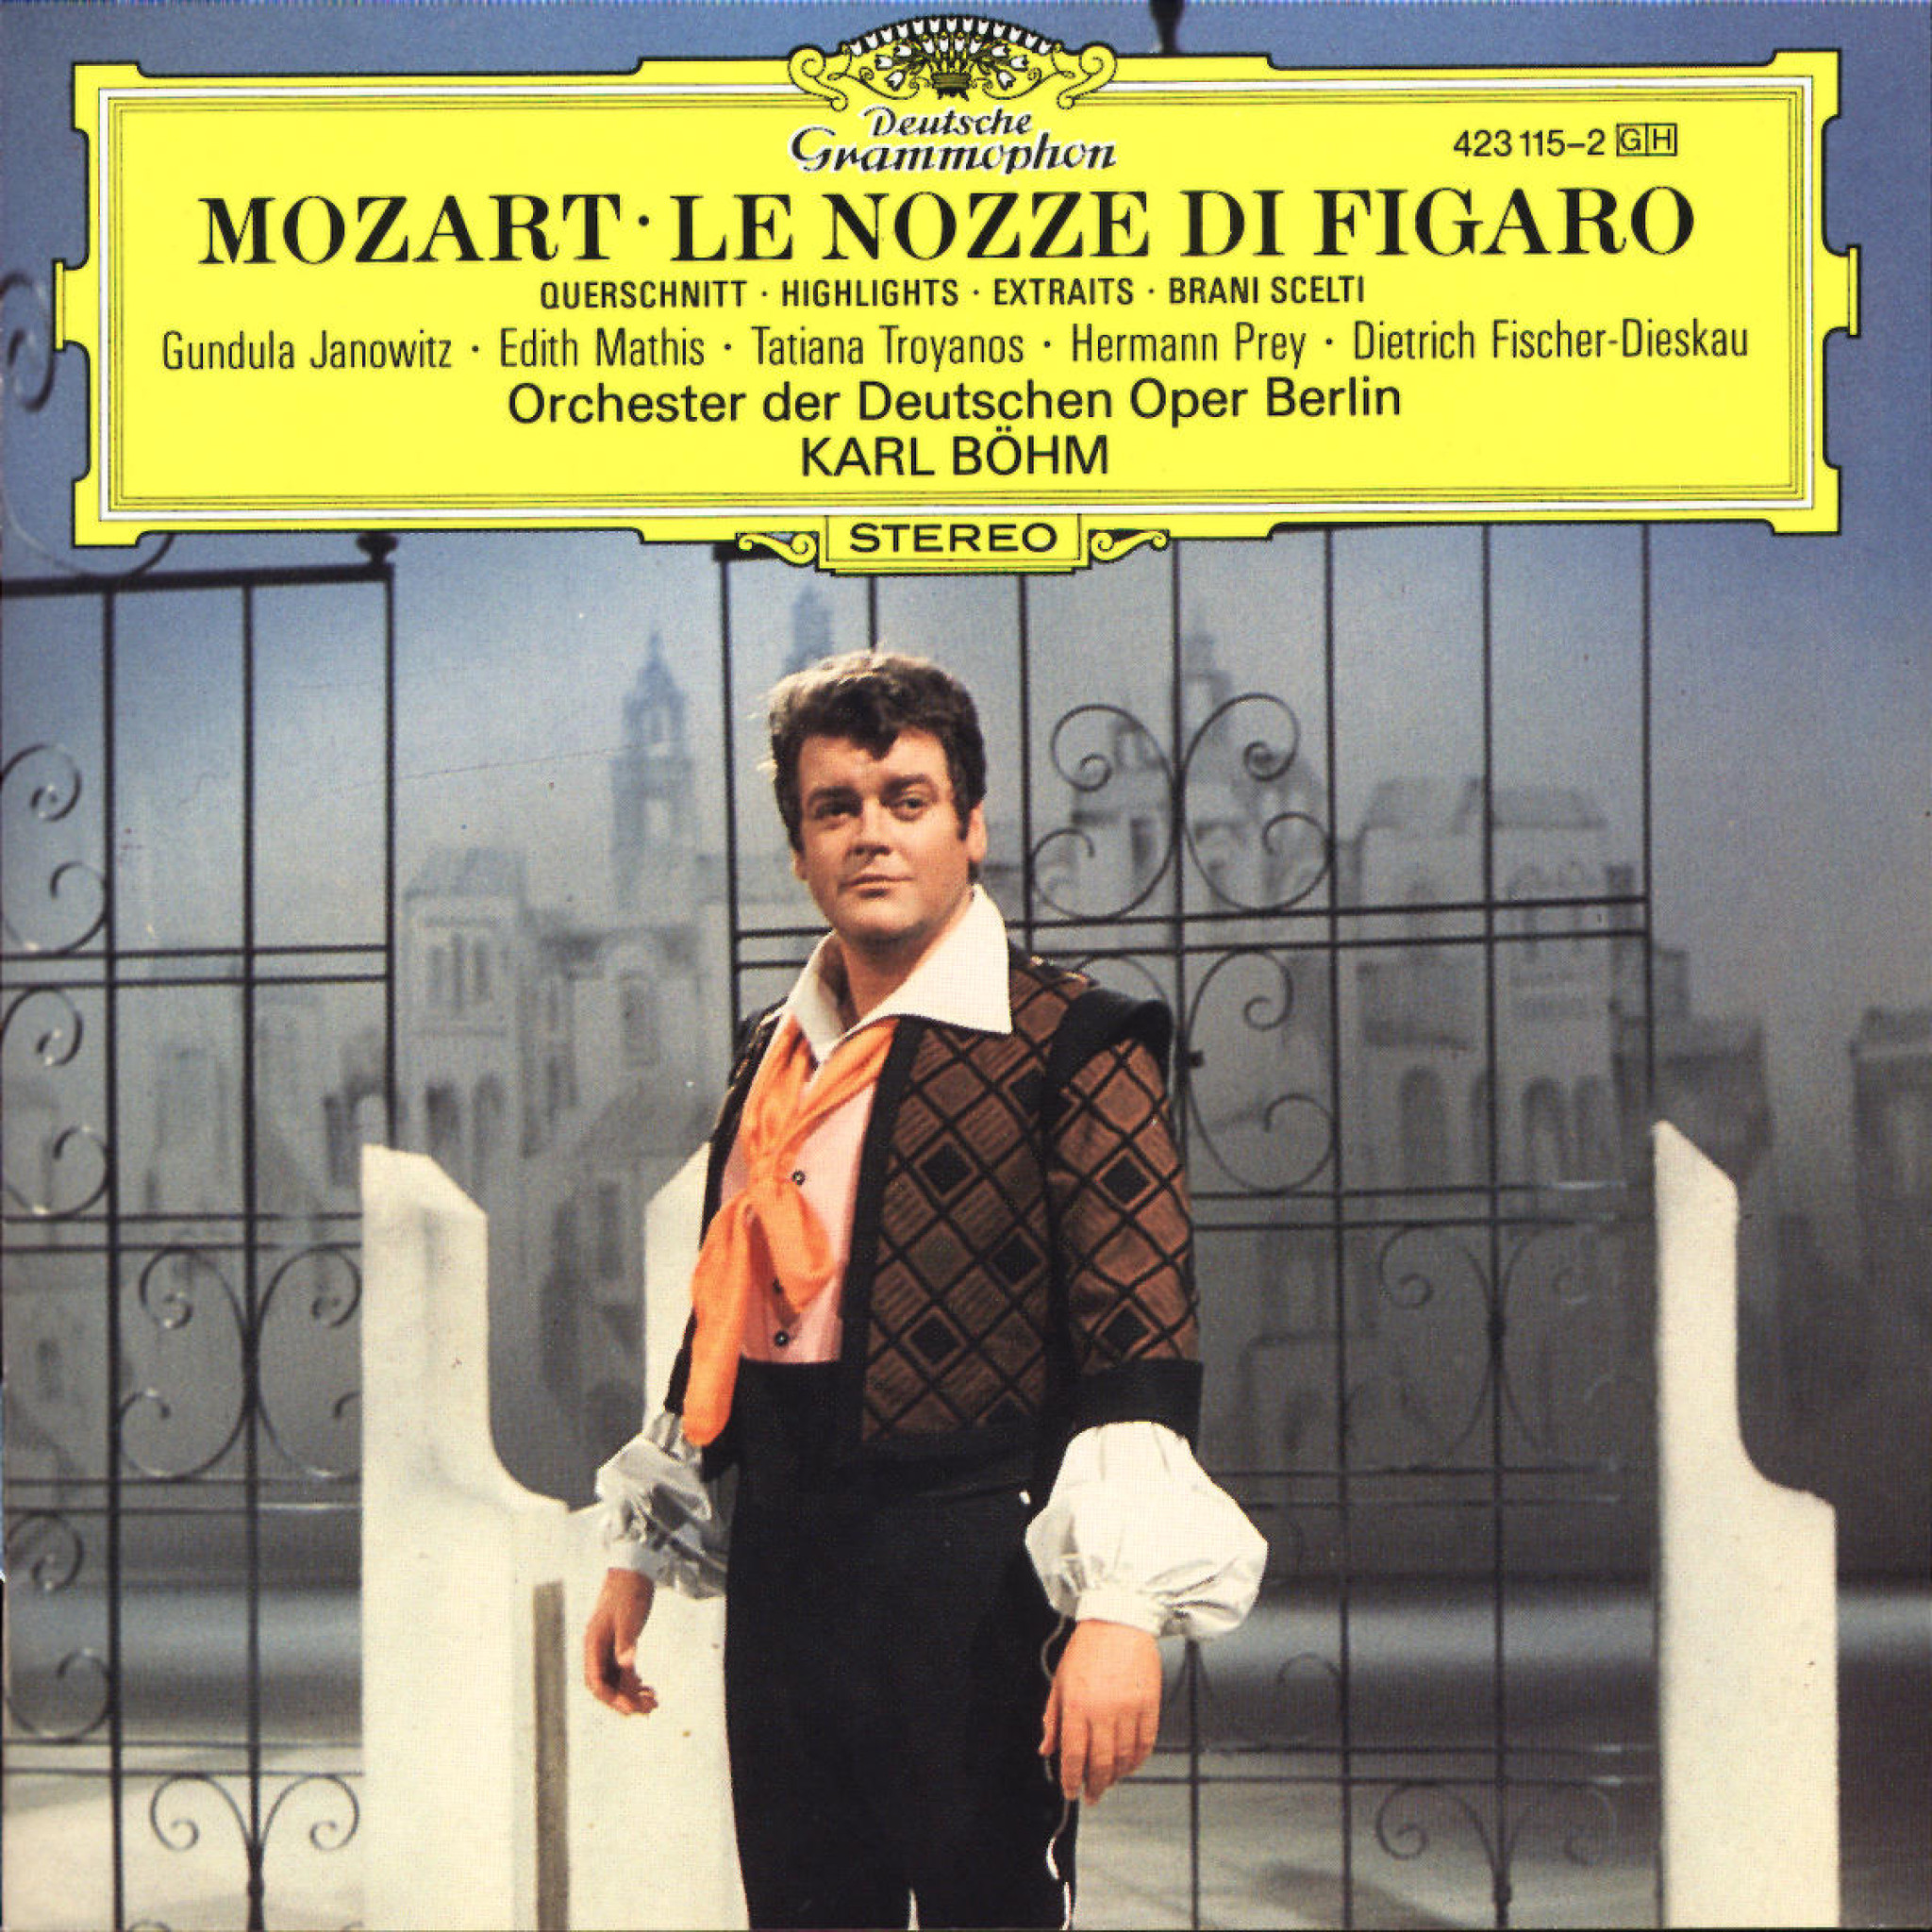 Mozart: Le nozze di Figaro - Highlights 0028942311525